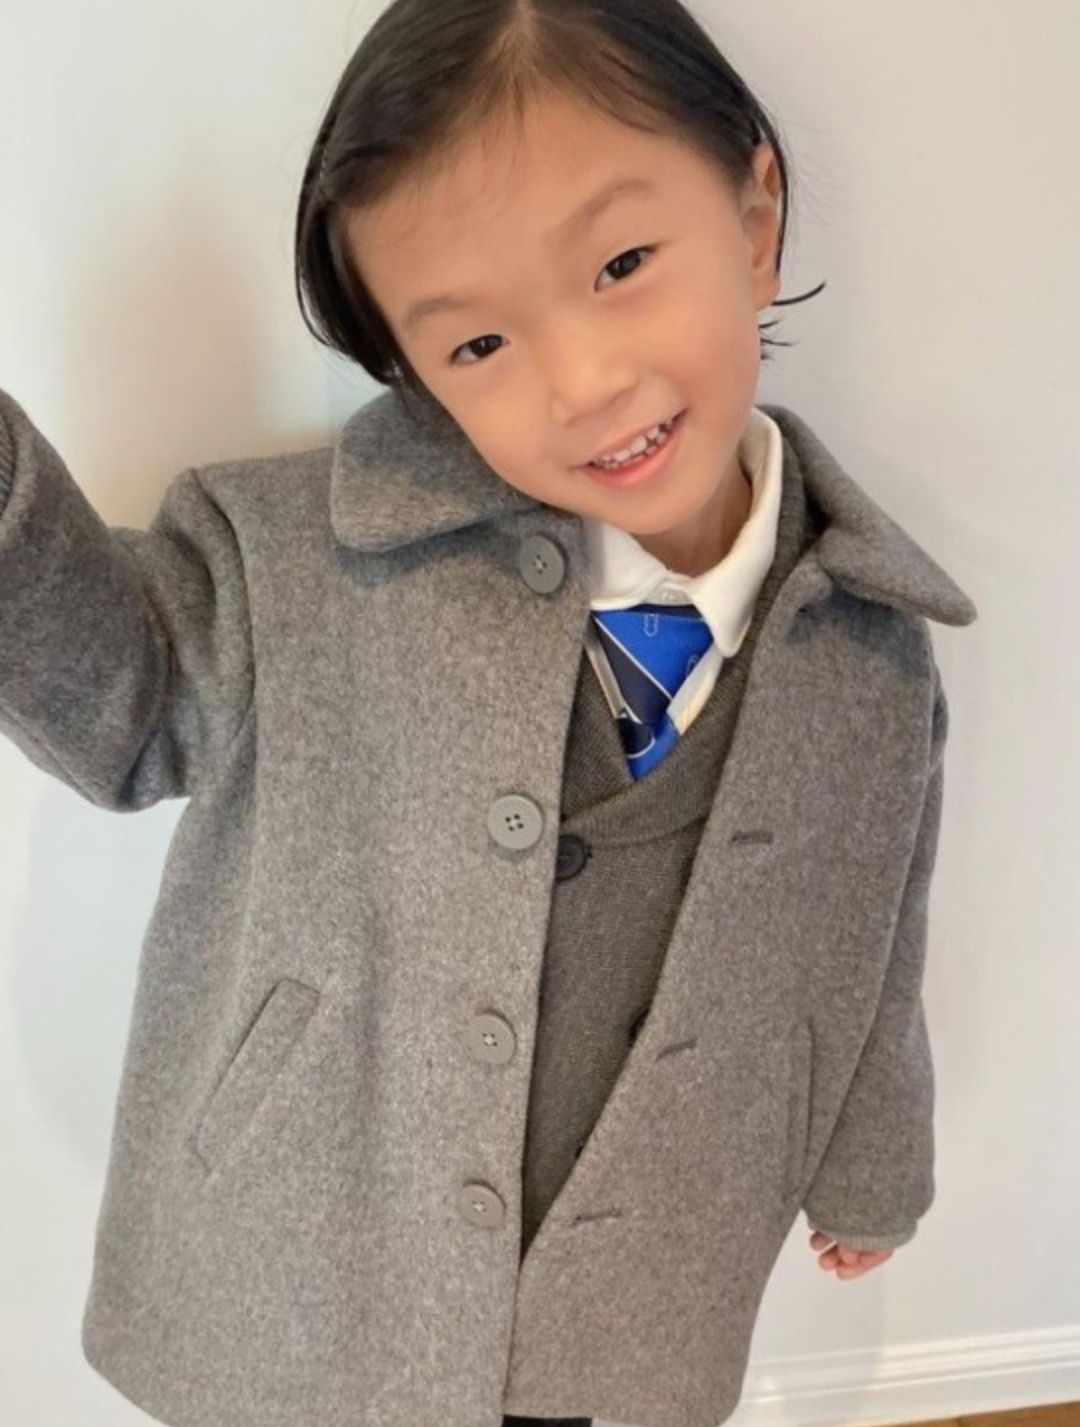 Kang Hao, putra Kang Gary yang kini berusia 6 tahun.